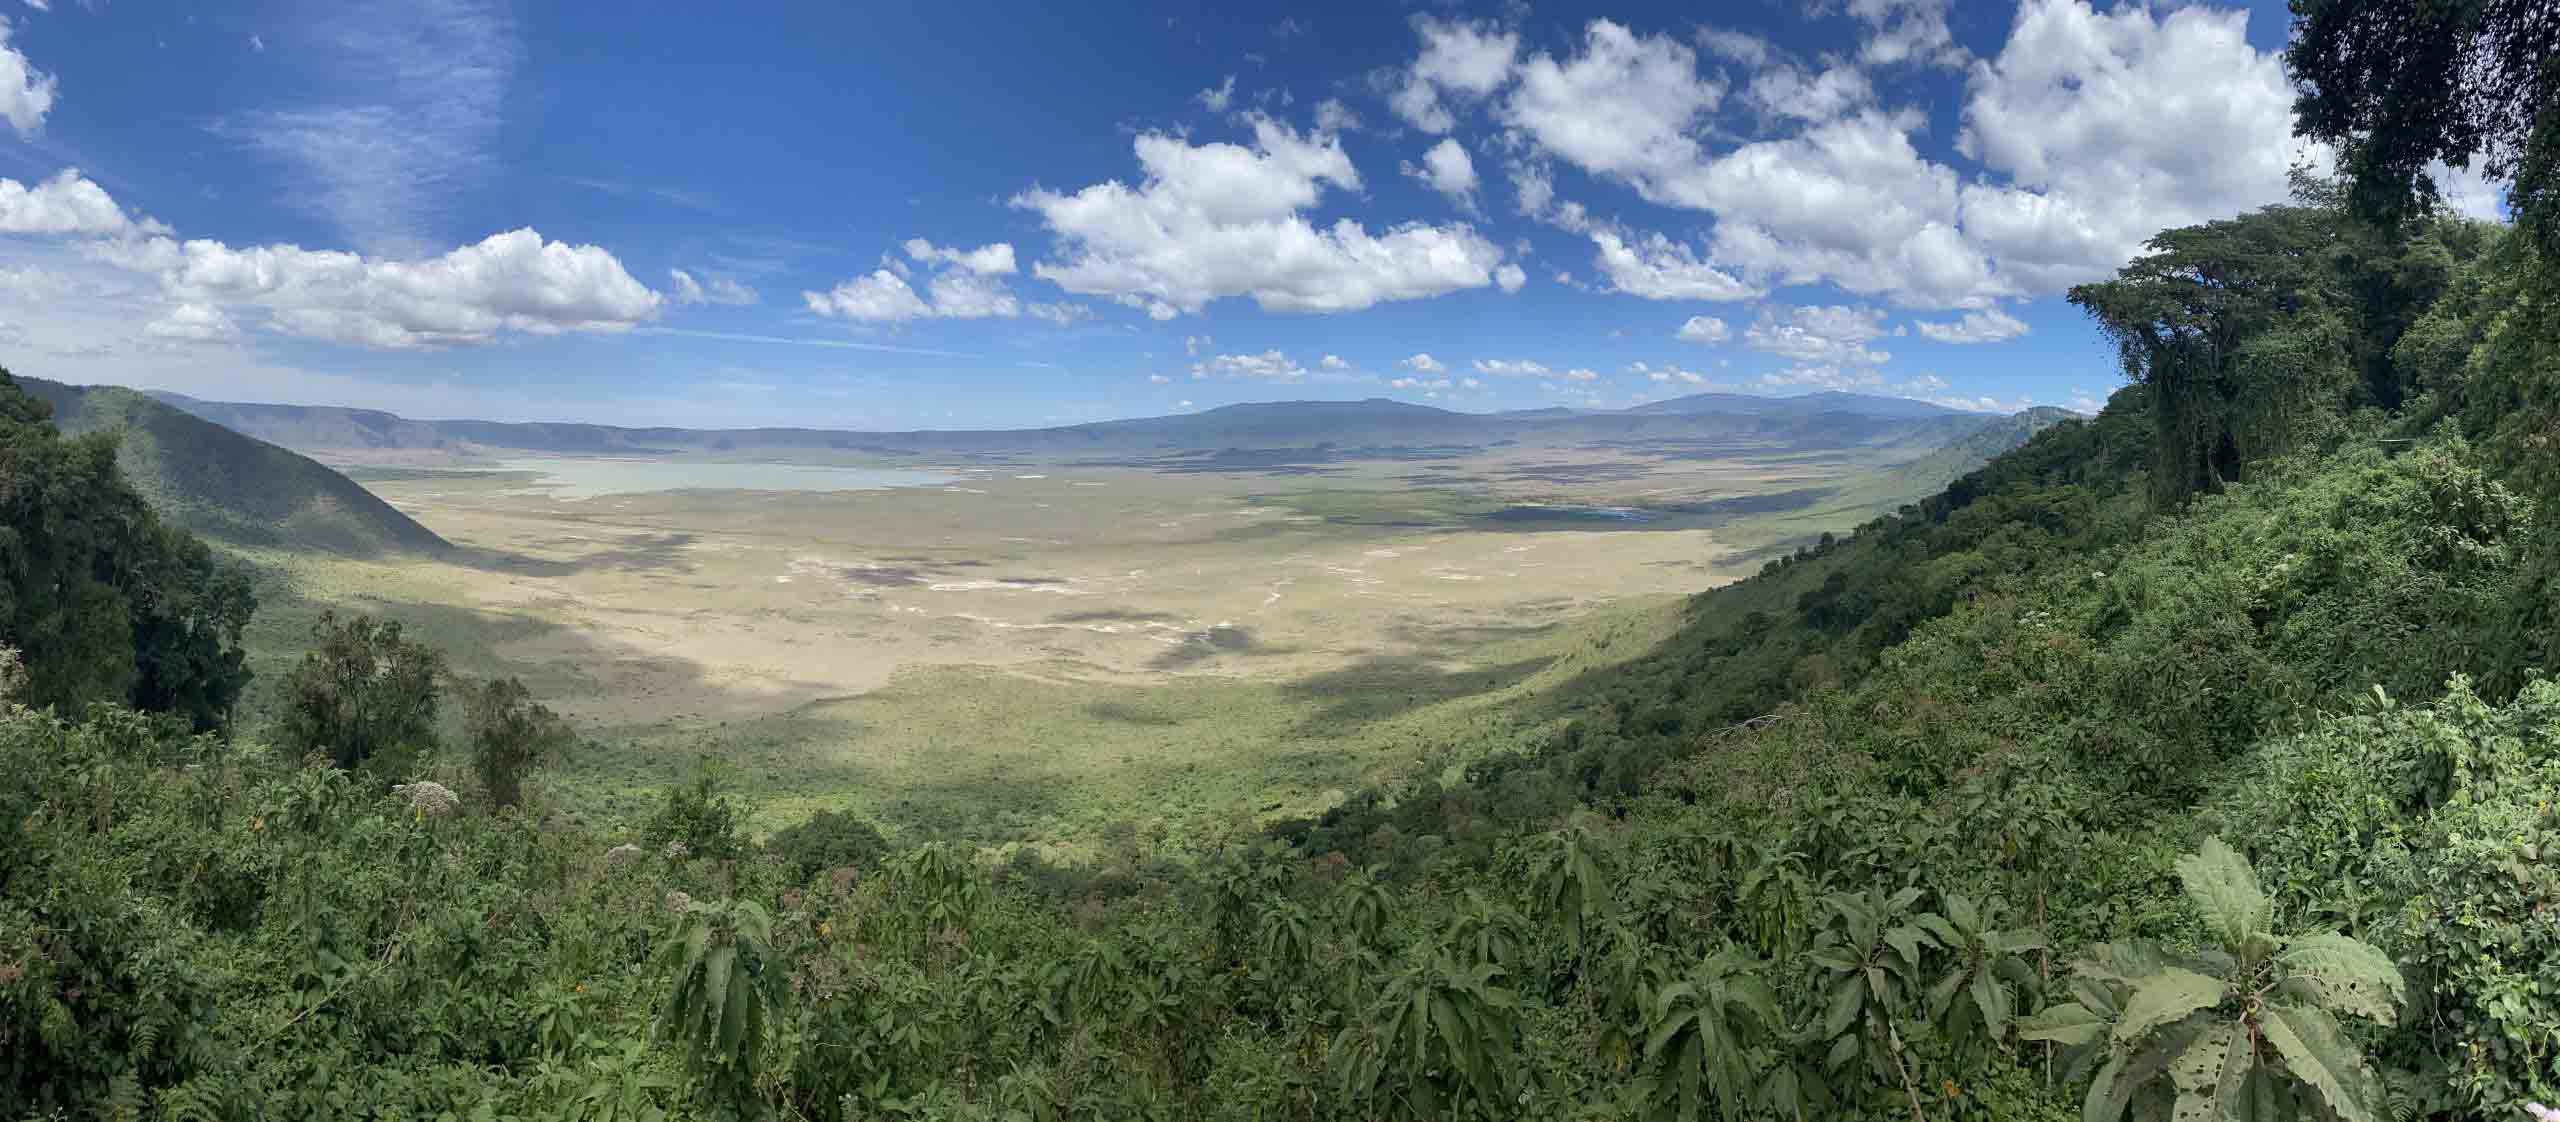 Day trip to Ngorongoro Crater